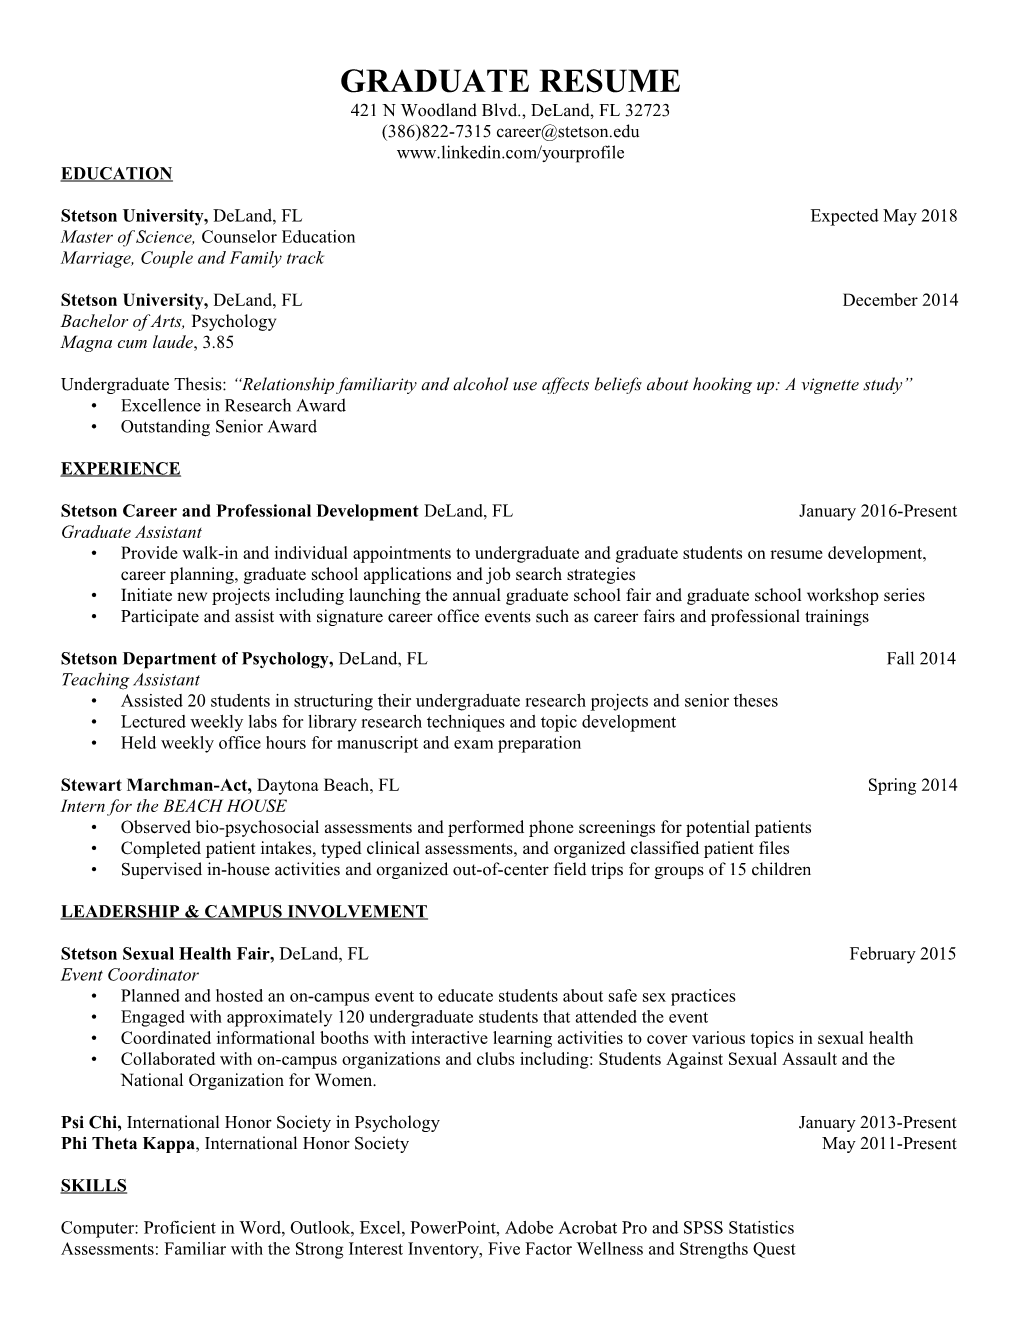 Graduate Resume